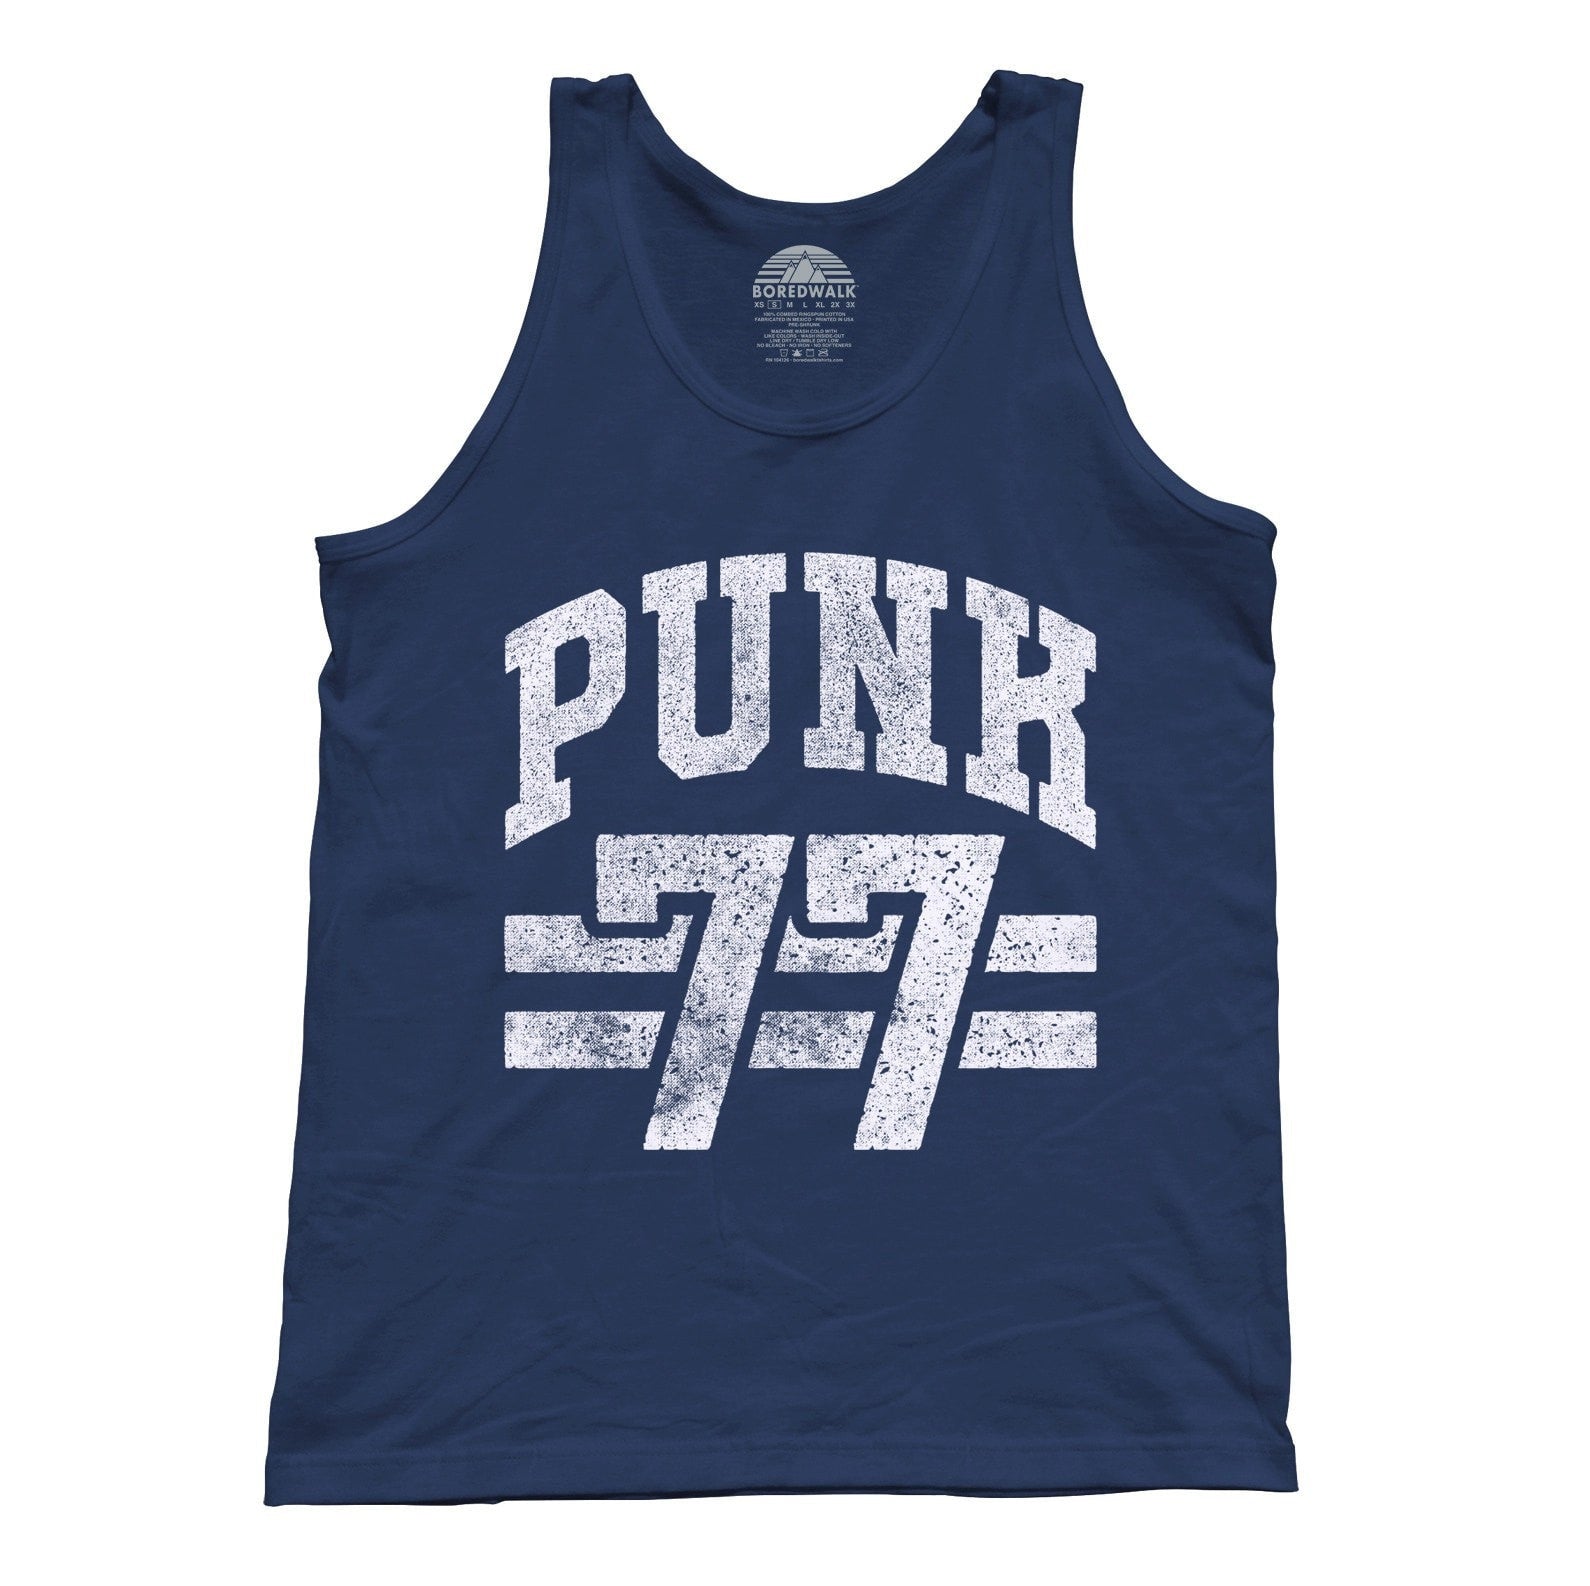 Unisex Punk 77 Tank Top - Alternative Music Punk Rock Grunge